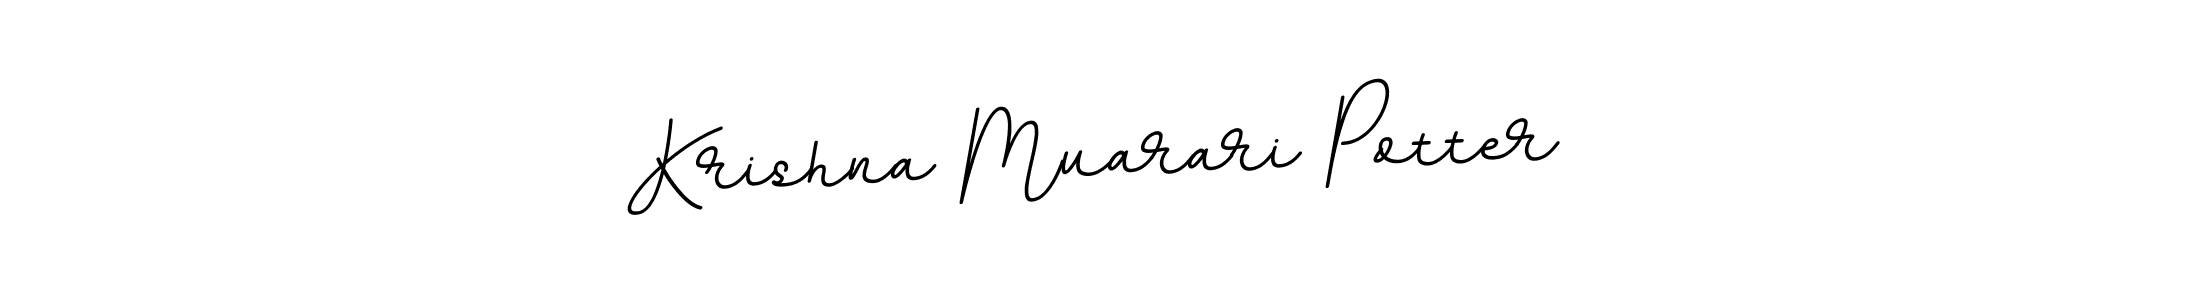 How to Draw Krishna Muarari Potter signature style? BallpointsItalic-DORy9 is a latest design signature styles for name Krishna Muarari Potter. Krishna Muarari Potter signature style 11 images and pictures png